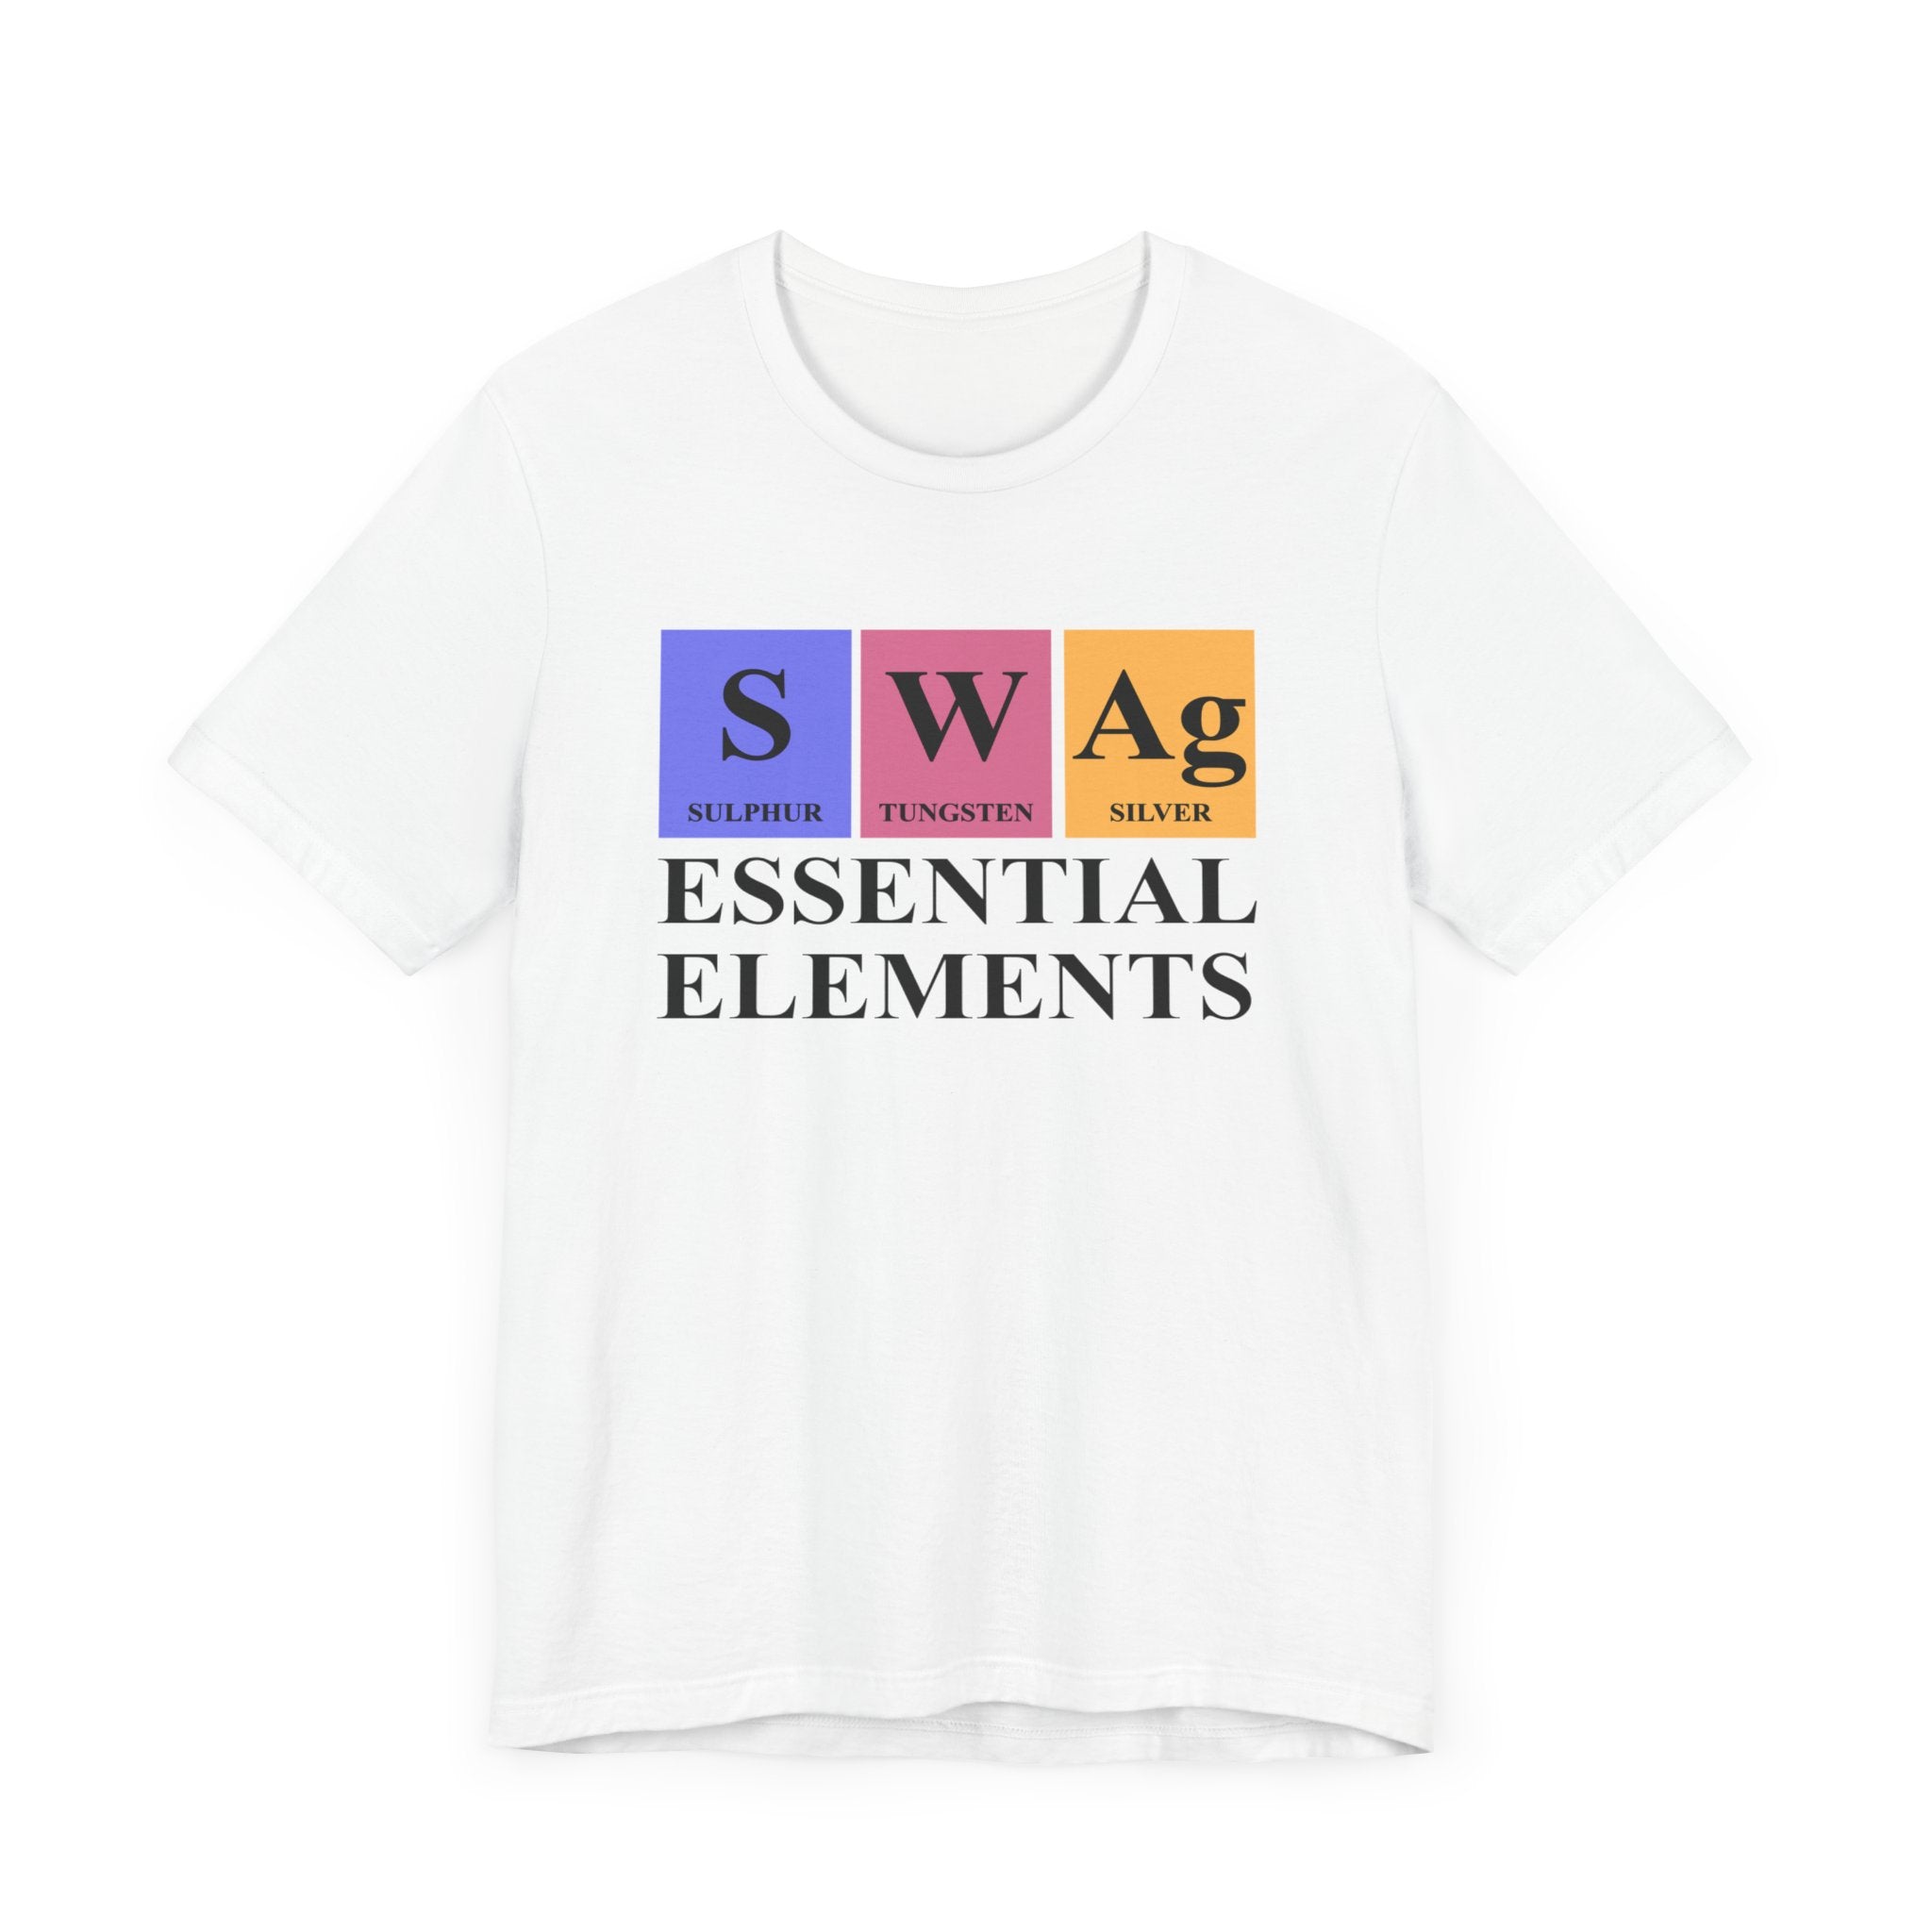 S-W-Ag T-Shirt